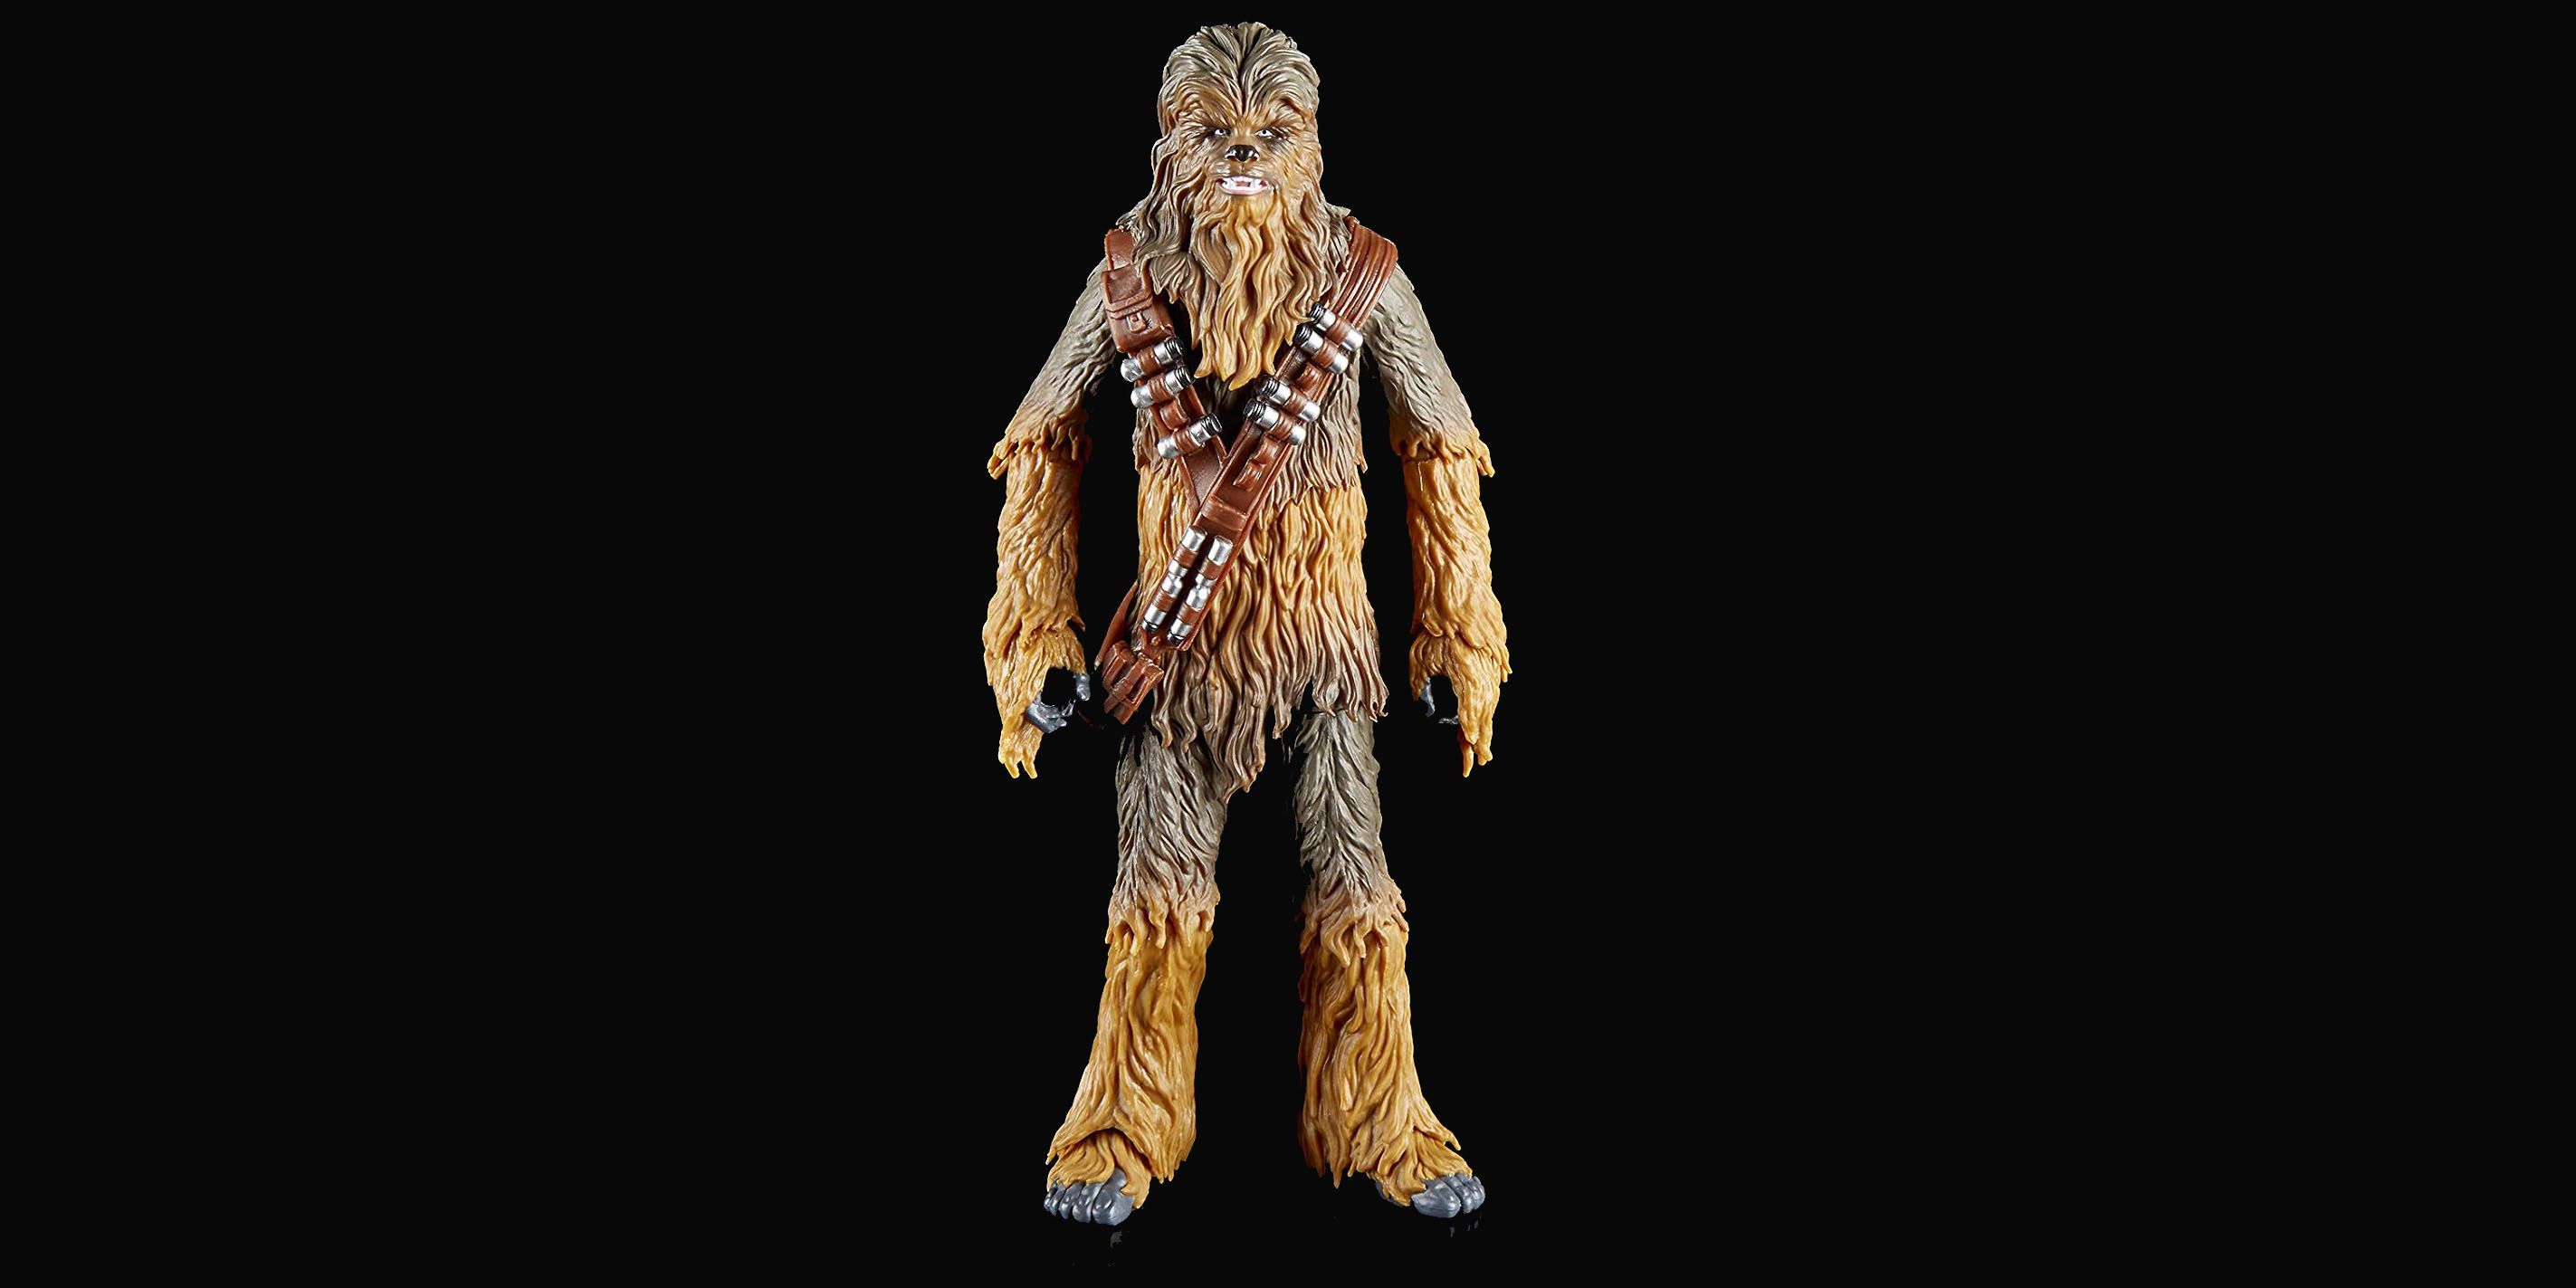 Best Action Figure: Chewbacca Action Figure